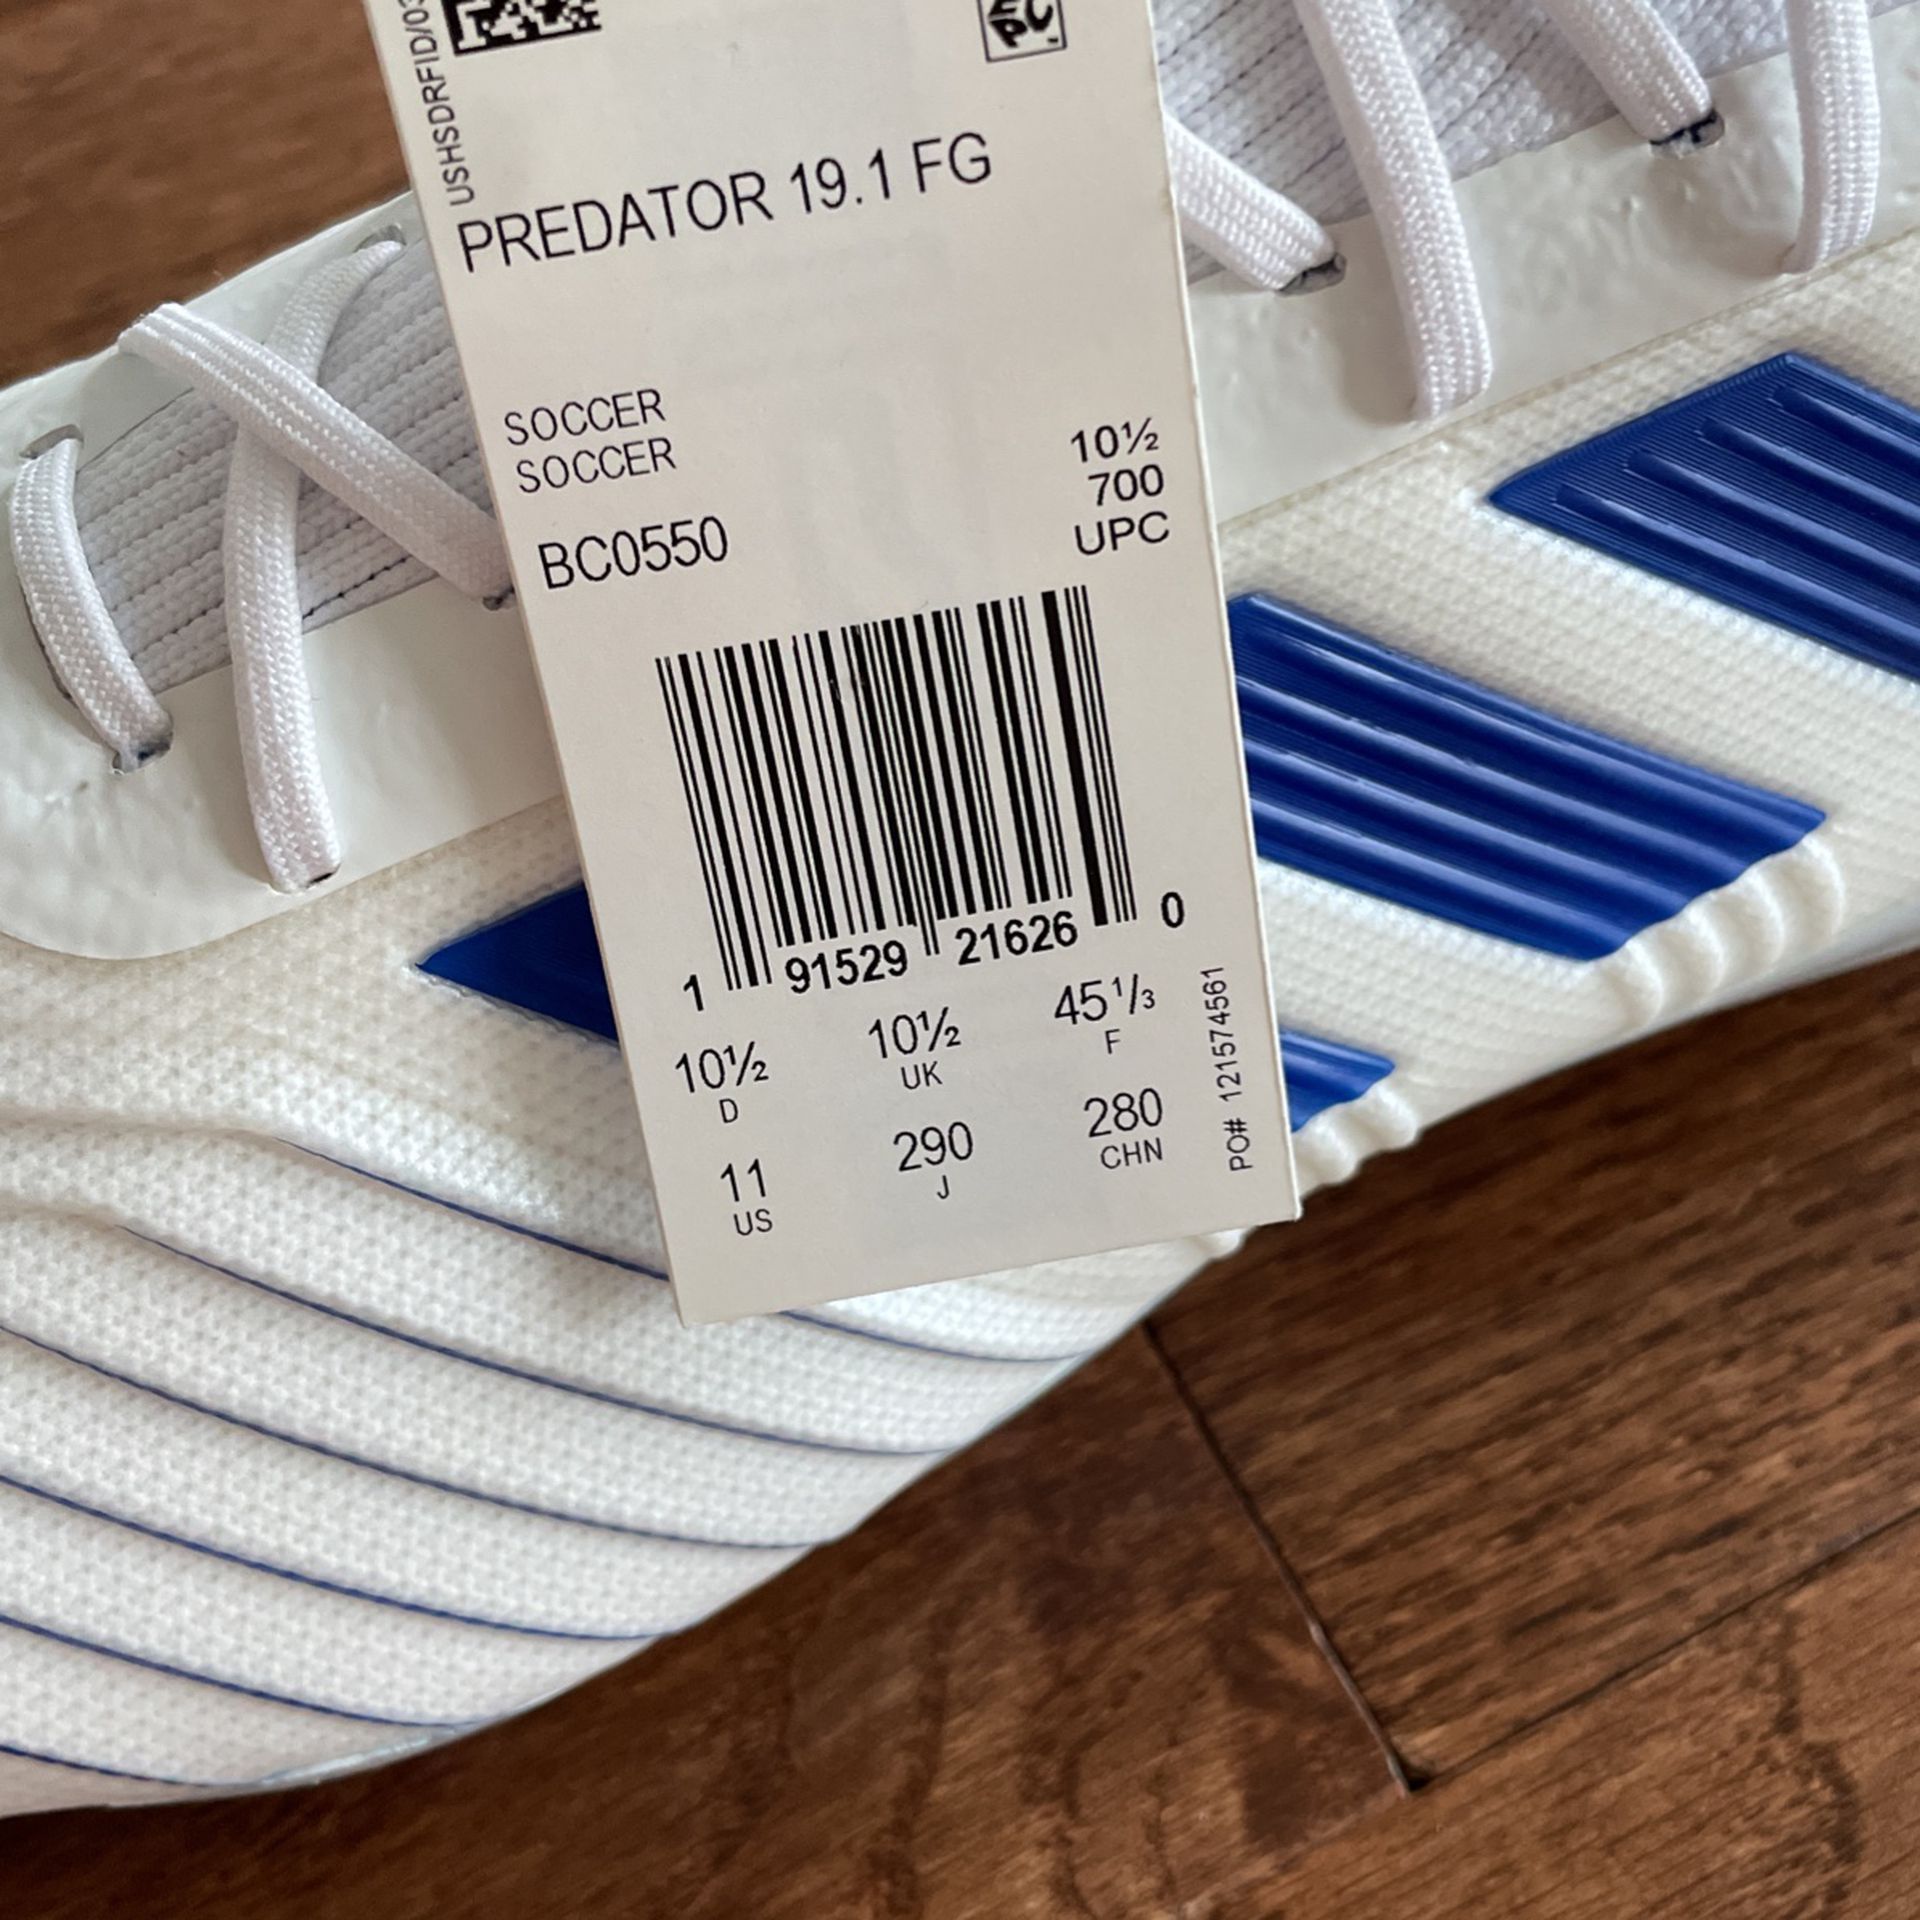 Adidas predator 19.1 FG size 11 